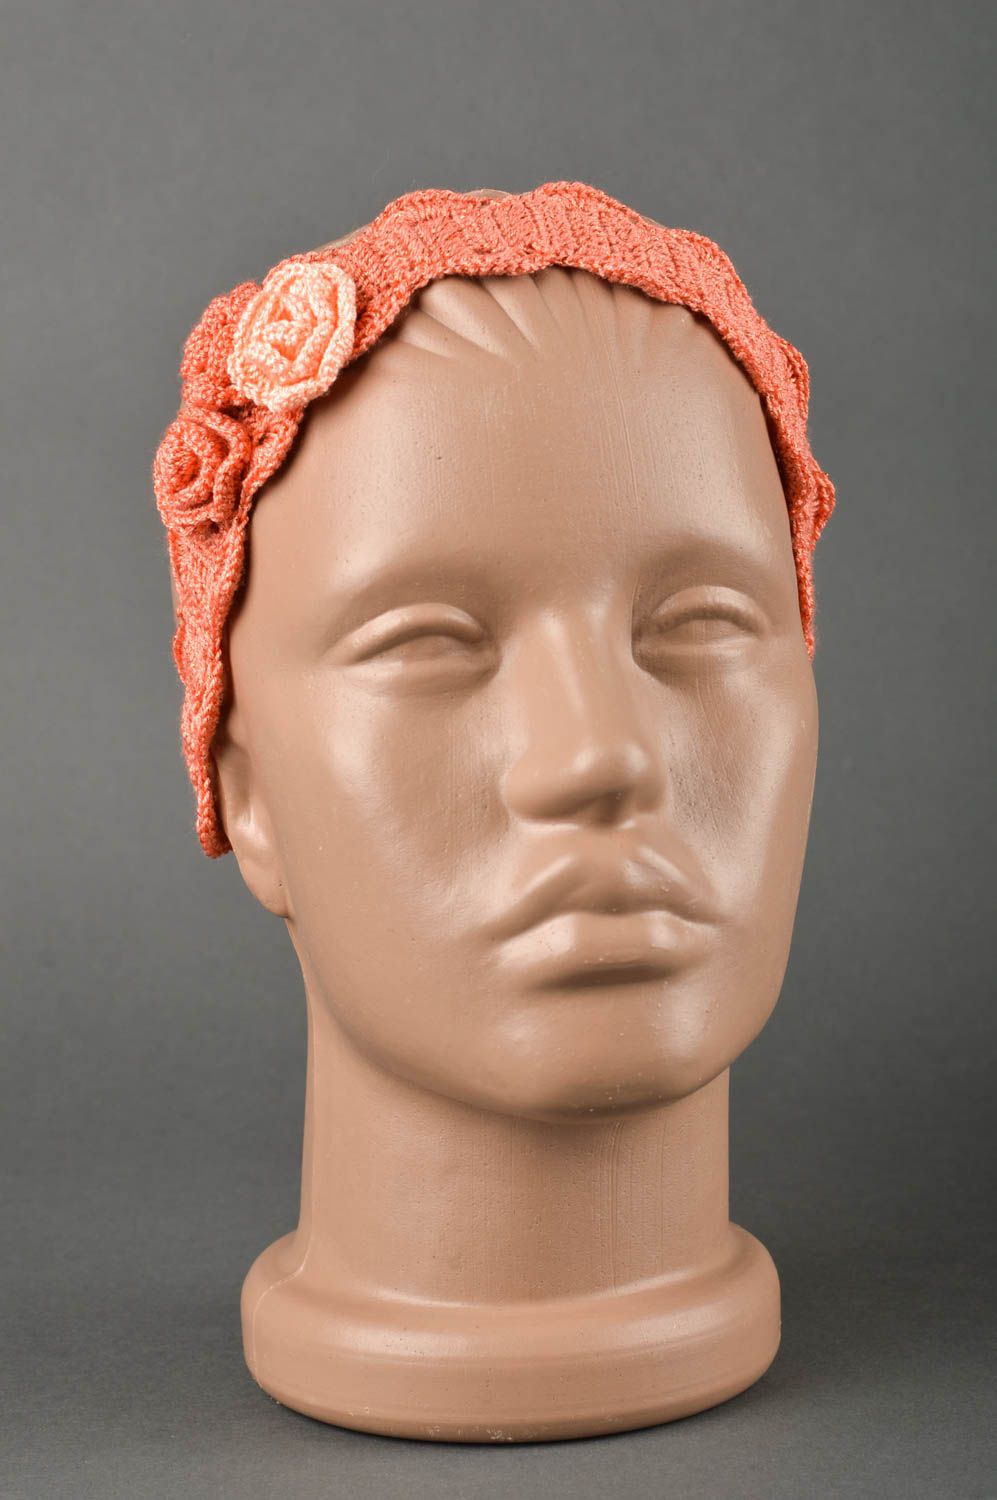 Unusual handmade crochet headband kids fashion hair accessories for girls photo 1